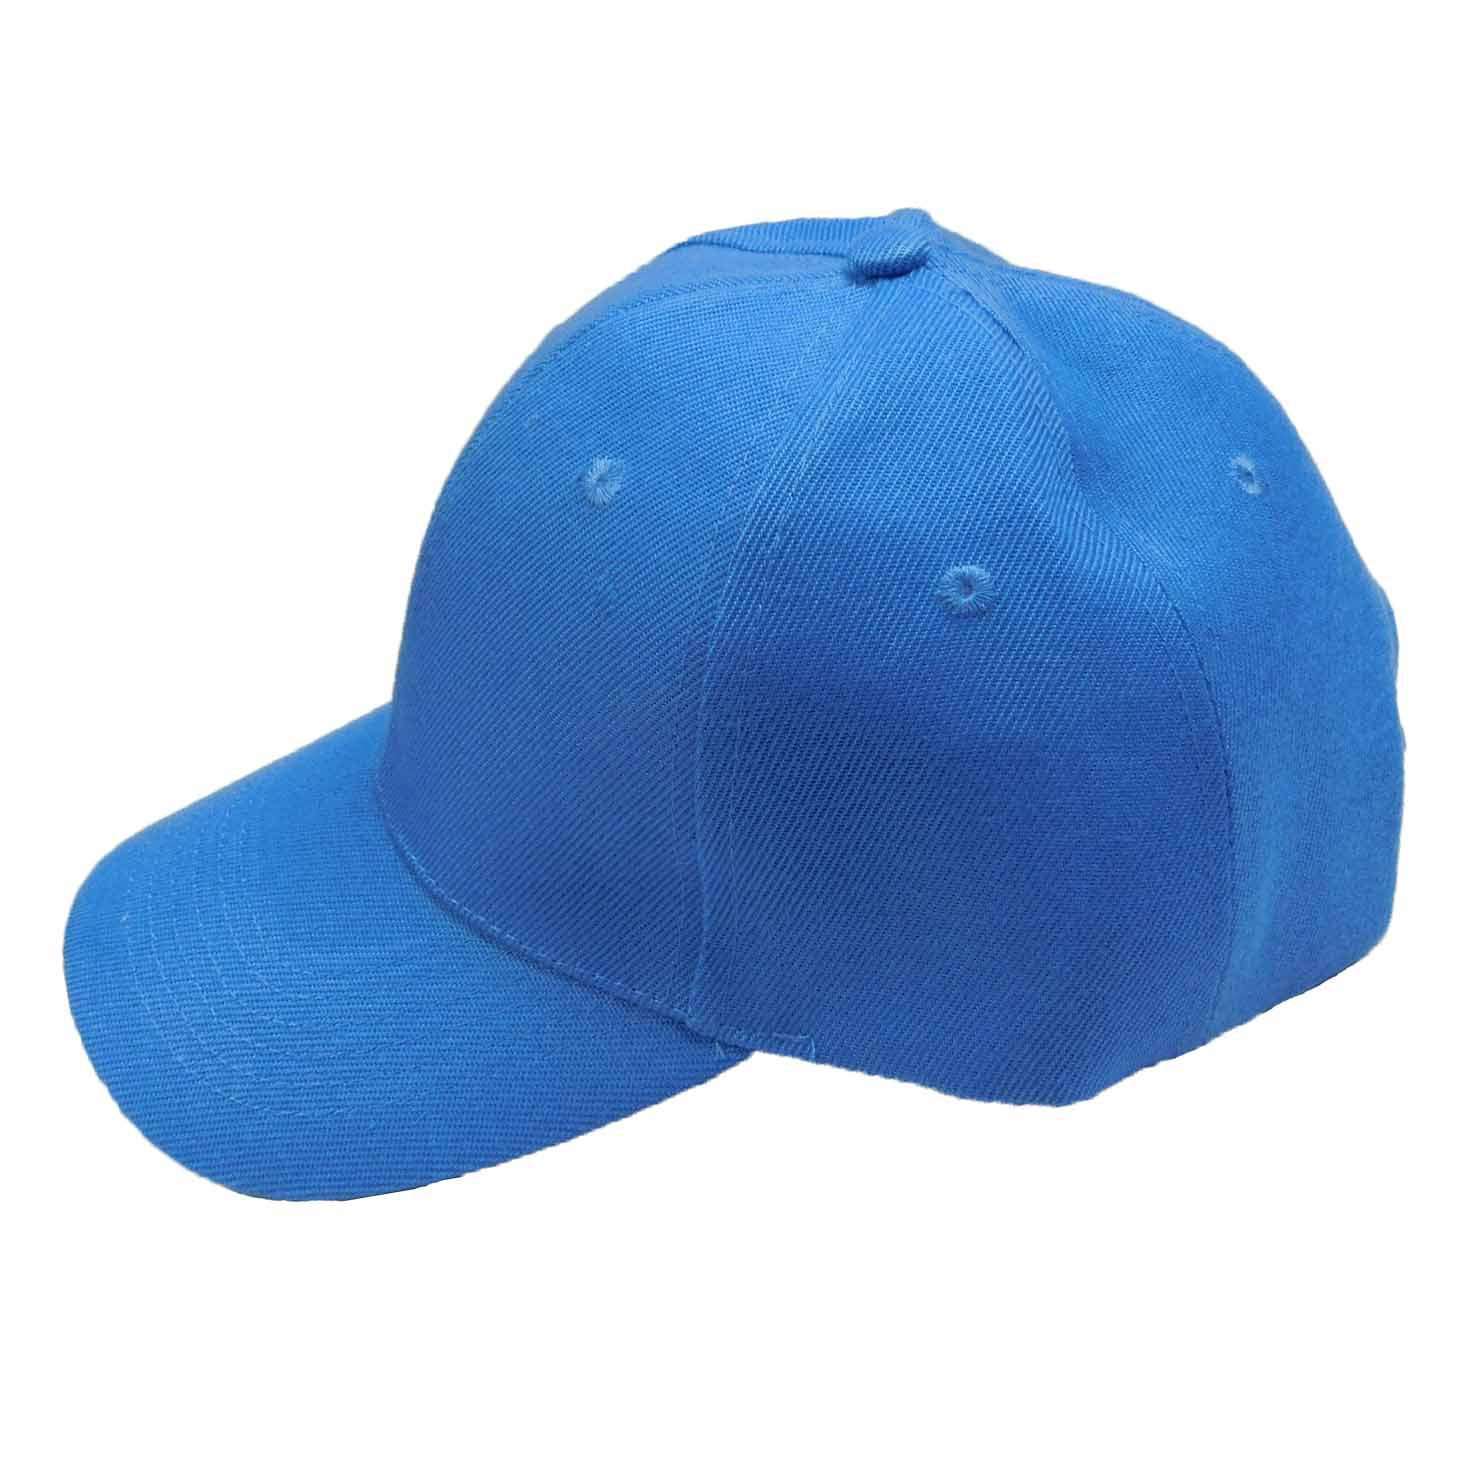 Baseball Cap with Stitched Bill Cap Milani Hats C001BL Sky Blue  